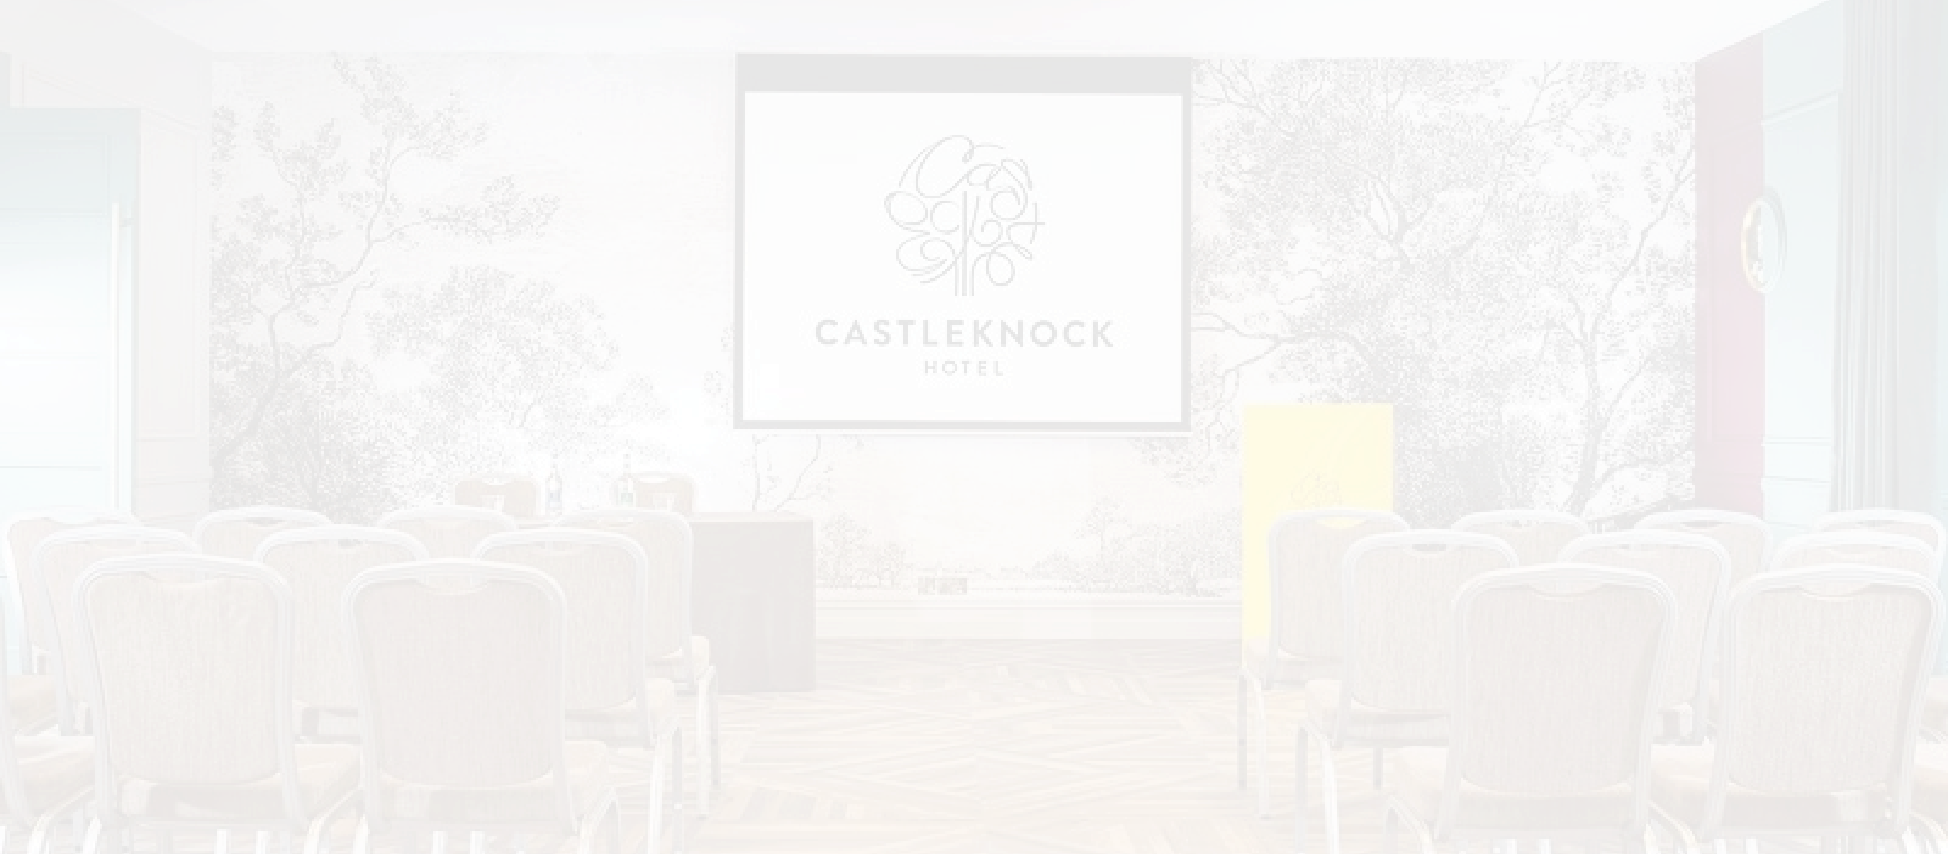 Castleknock hotel